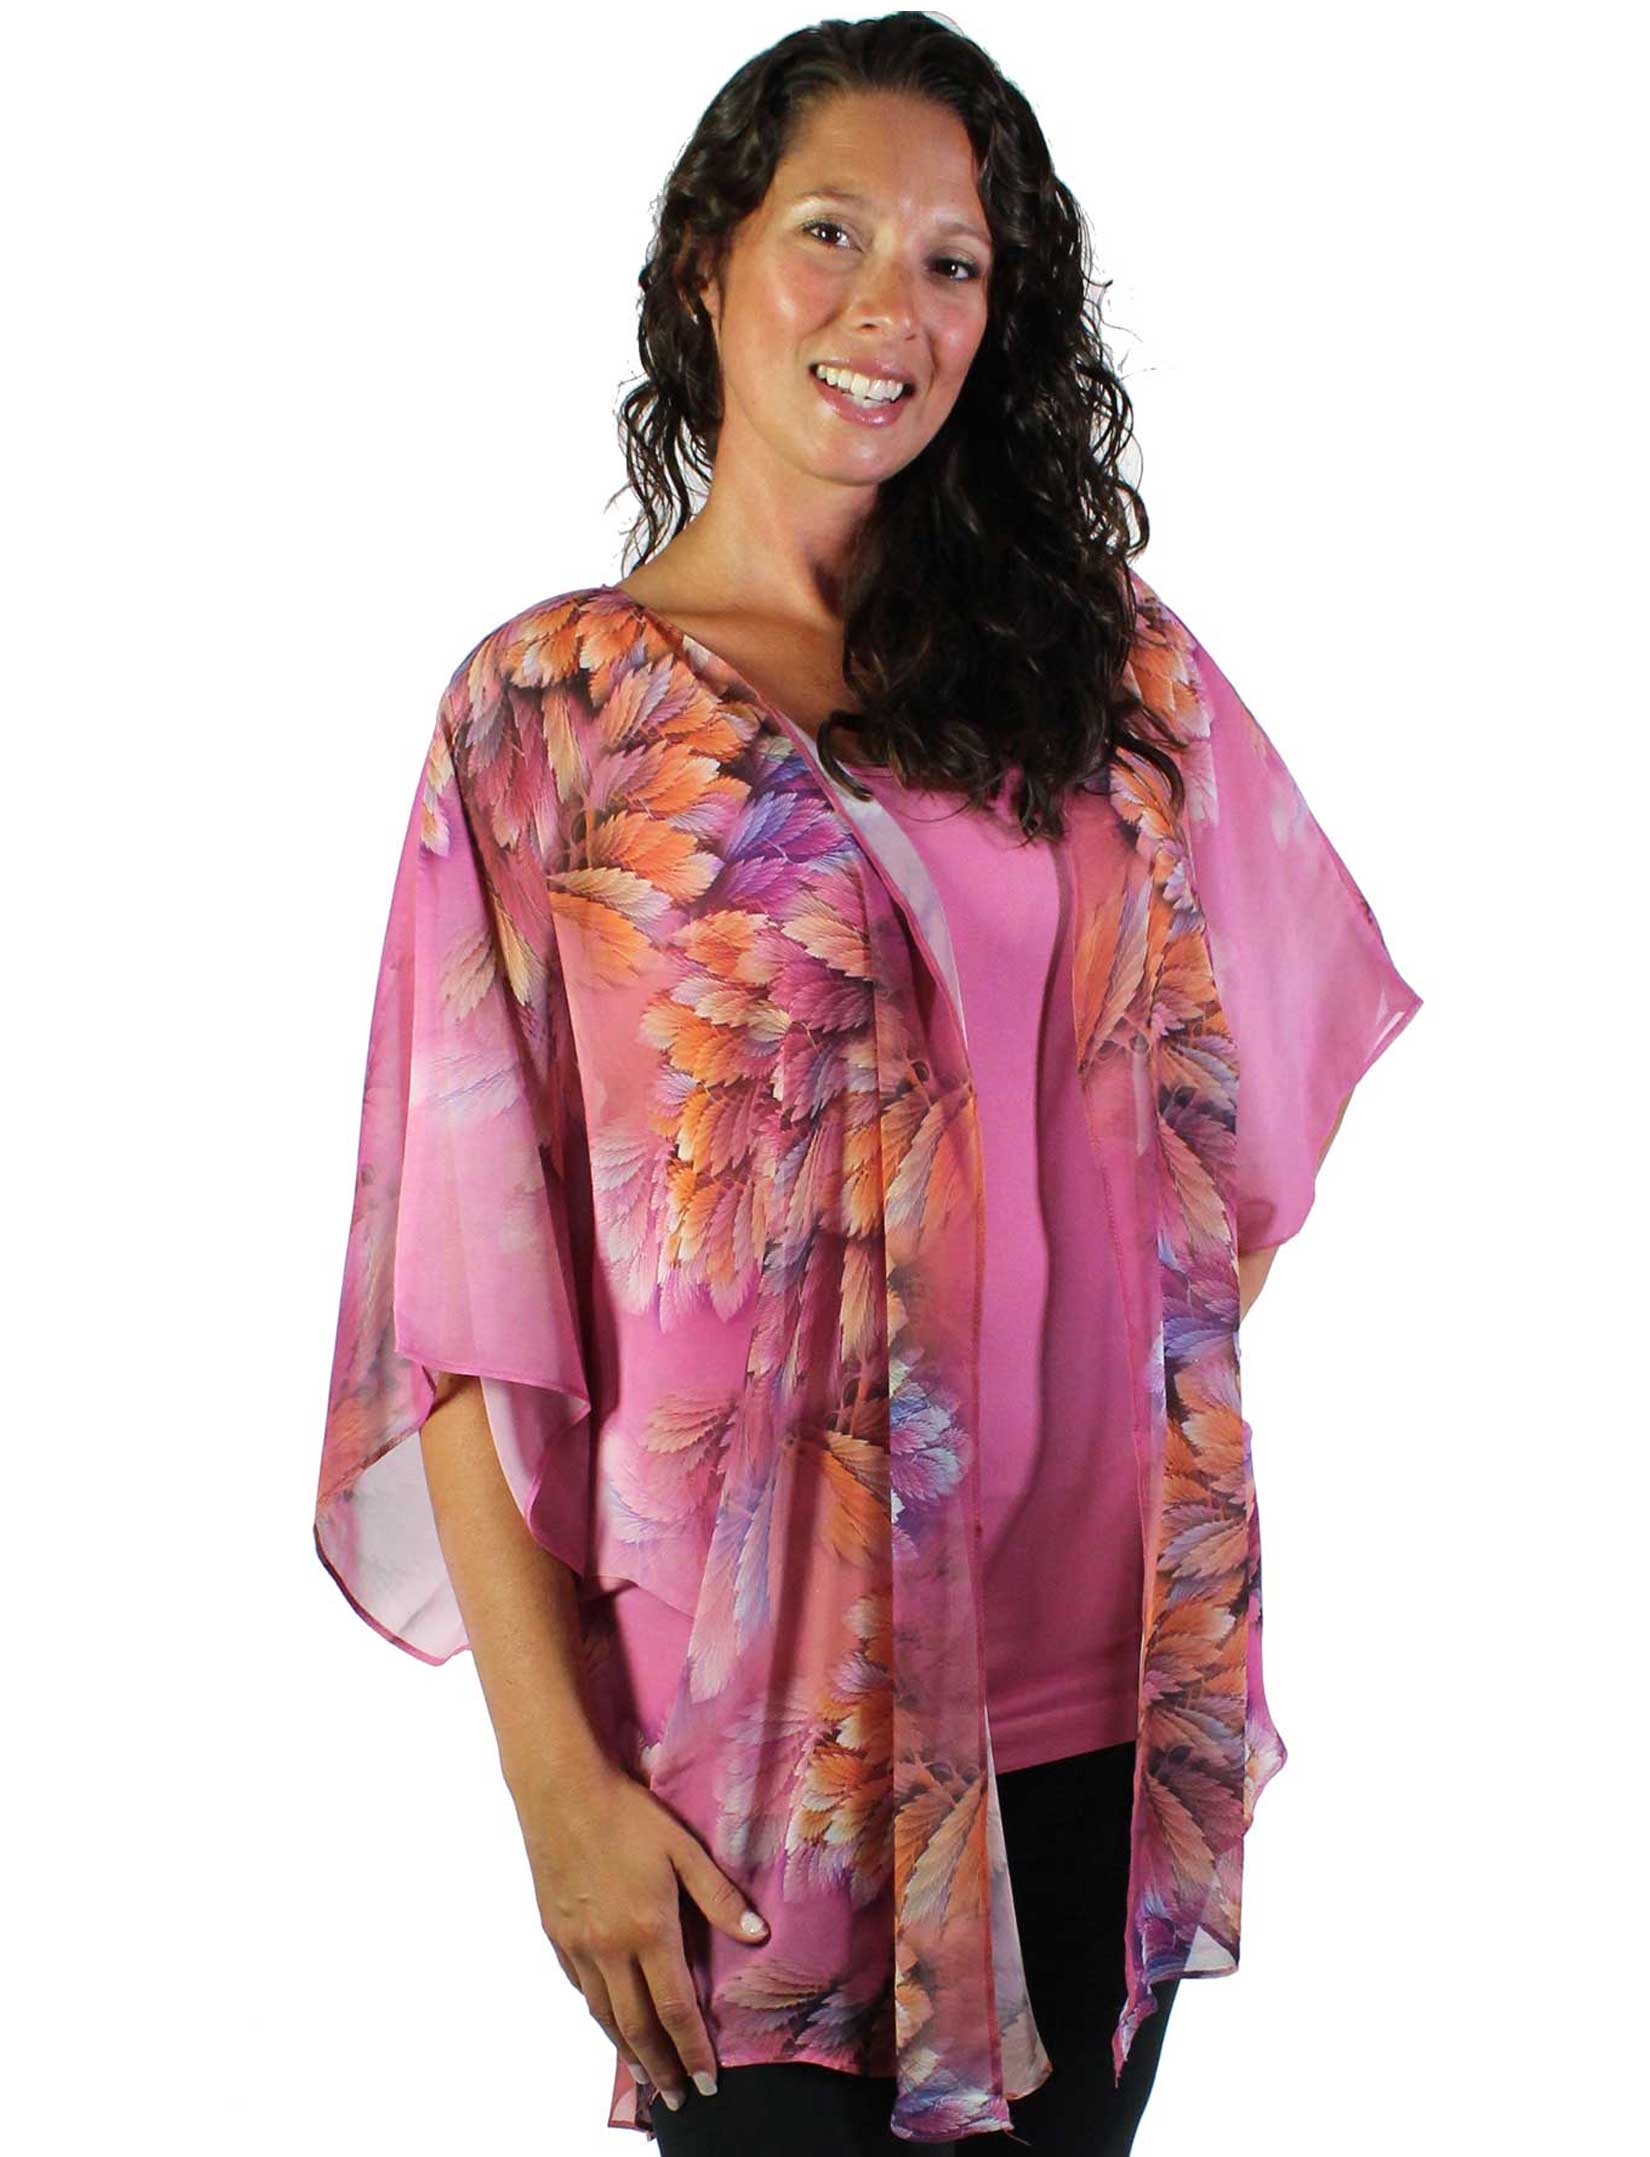 P27 - Pink<br>
Chiffon Kimono